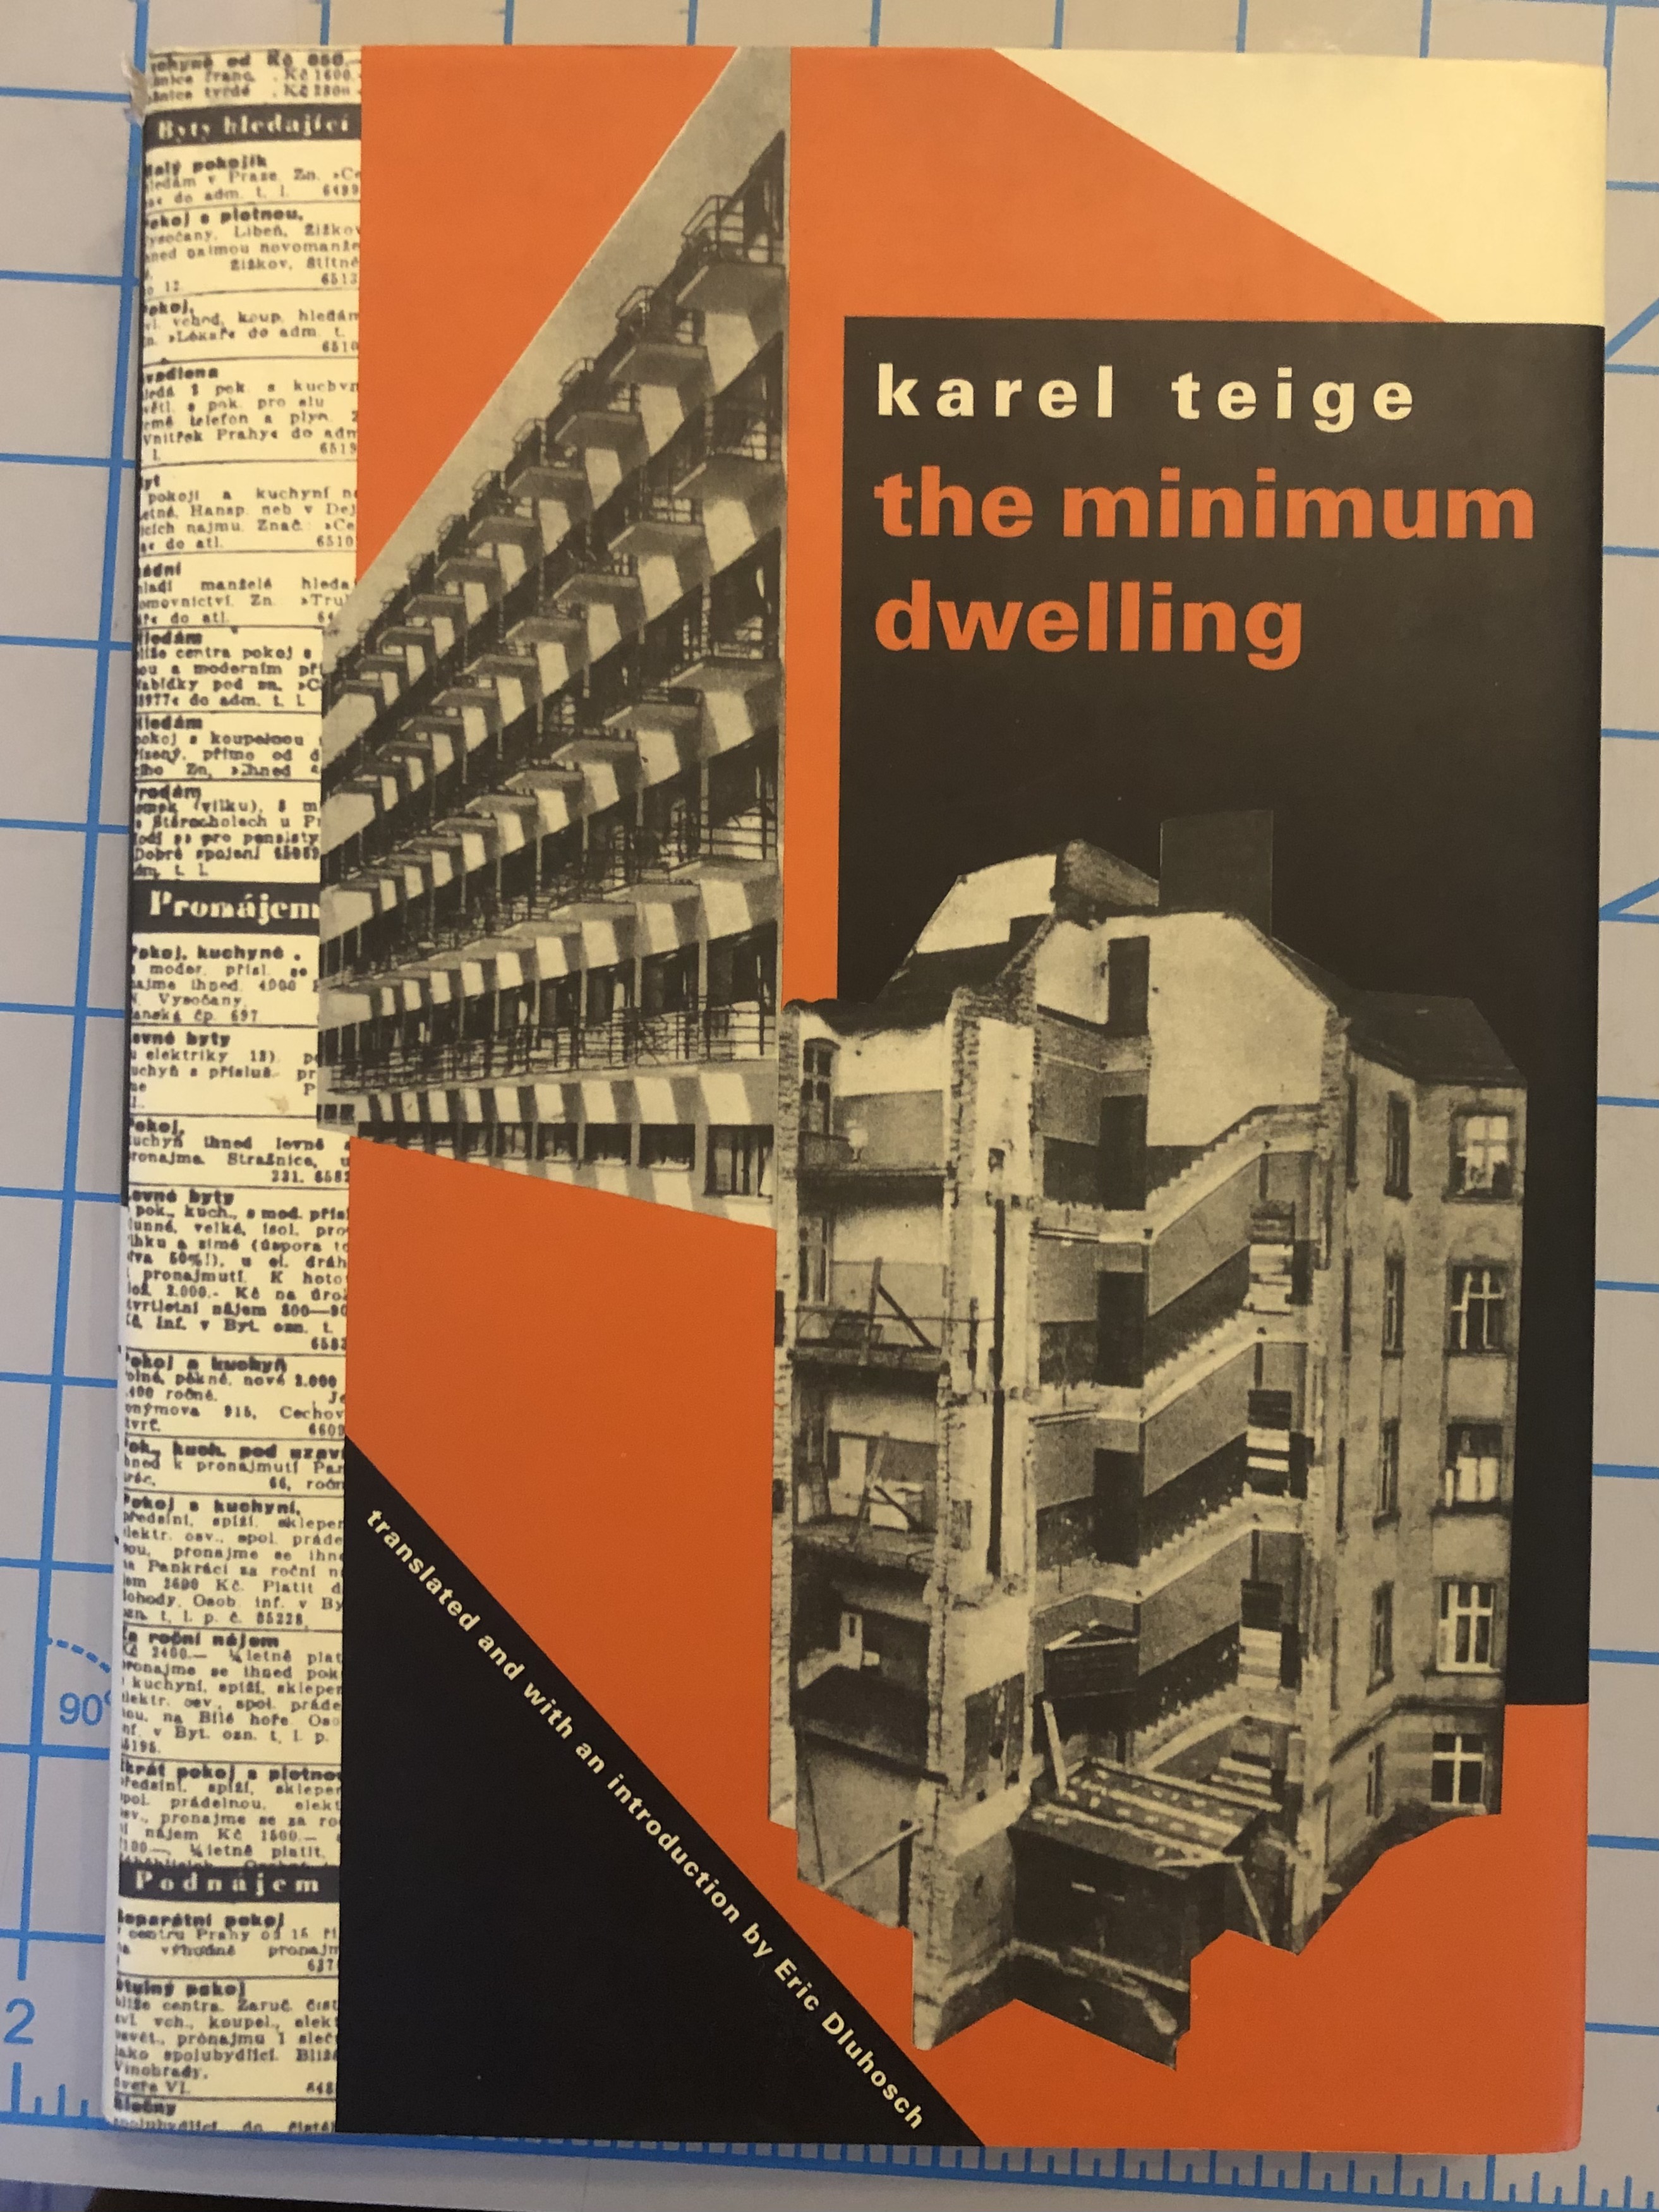 The Minimum Dwelling - Teige, Karel; Dluhosch, Eric, trans.